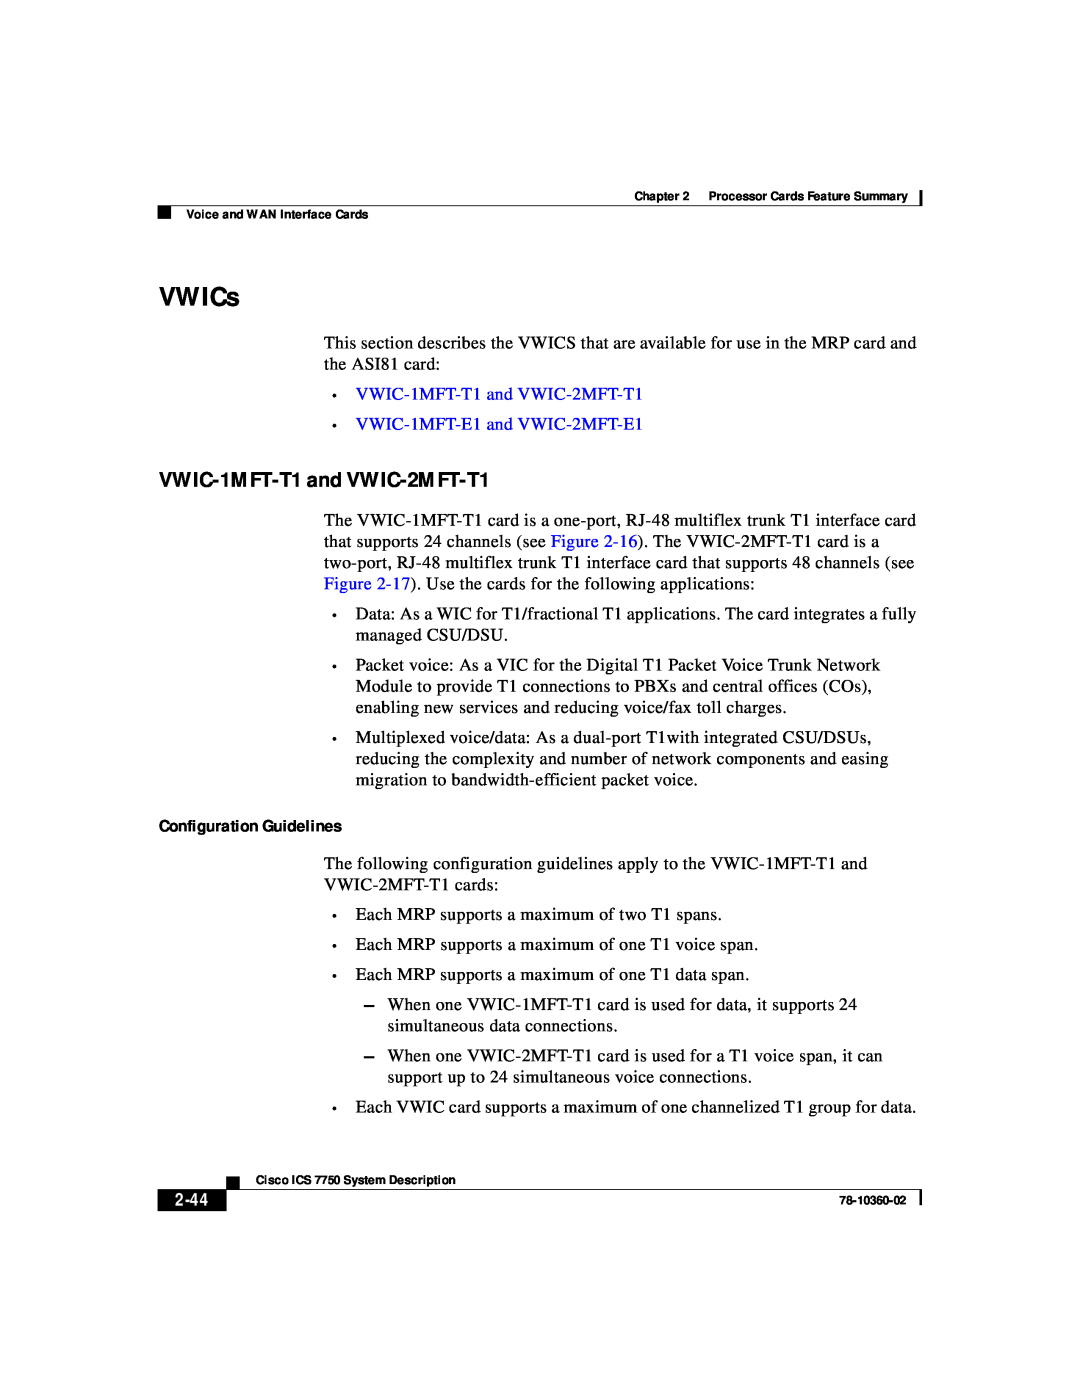 Cisco Systems ICS-7750 manual VWICs, VWIC-1MFT-T1 and VWIC-2MFT-T1, Configuration Guidelines, 2-44 